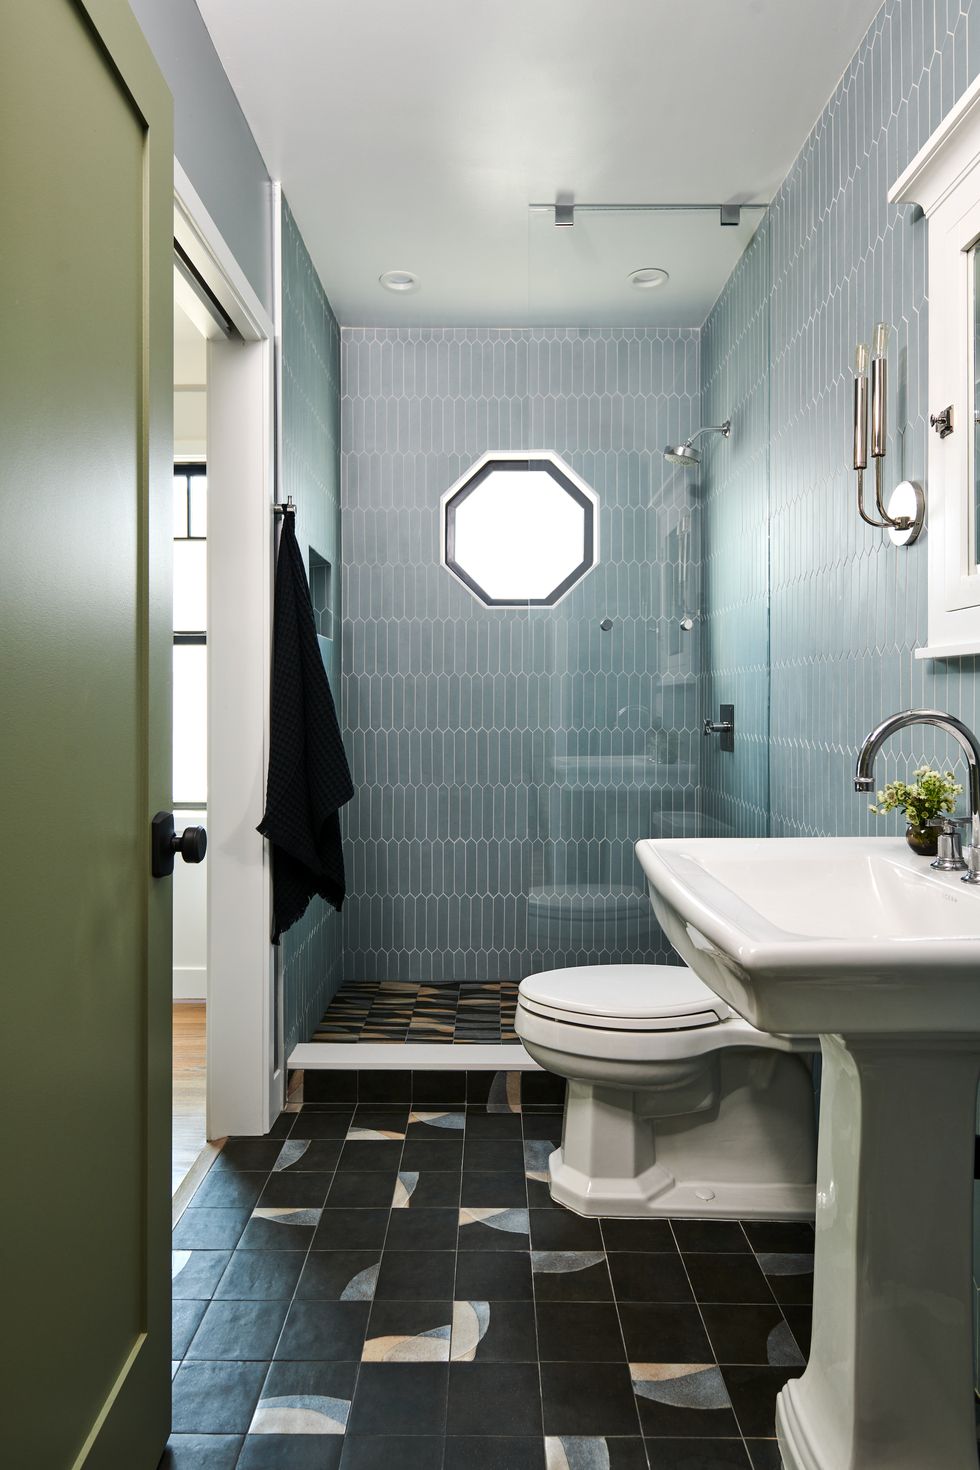 patterned bathroom floor designed by lh designs